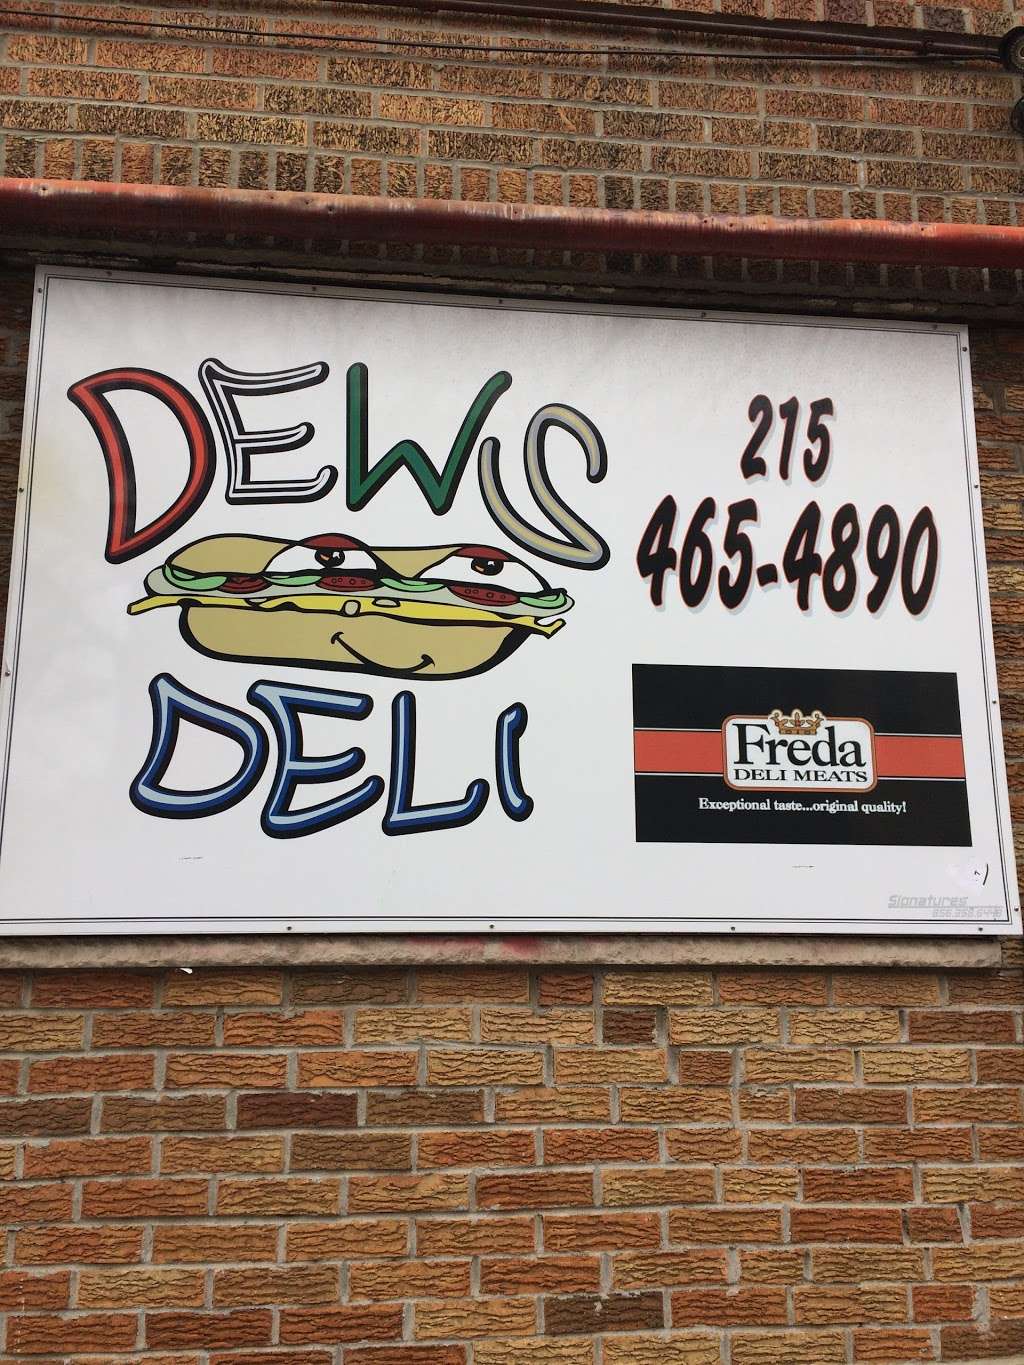 Dews Deli | 1710 S 10th St, Philadelphia, PA 19148 | Phone: (215) 465-4890